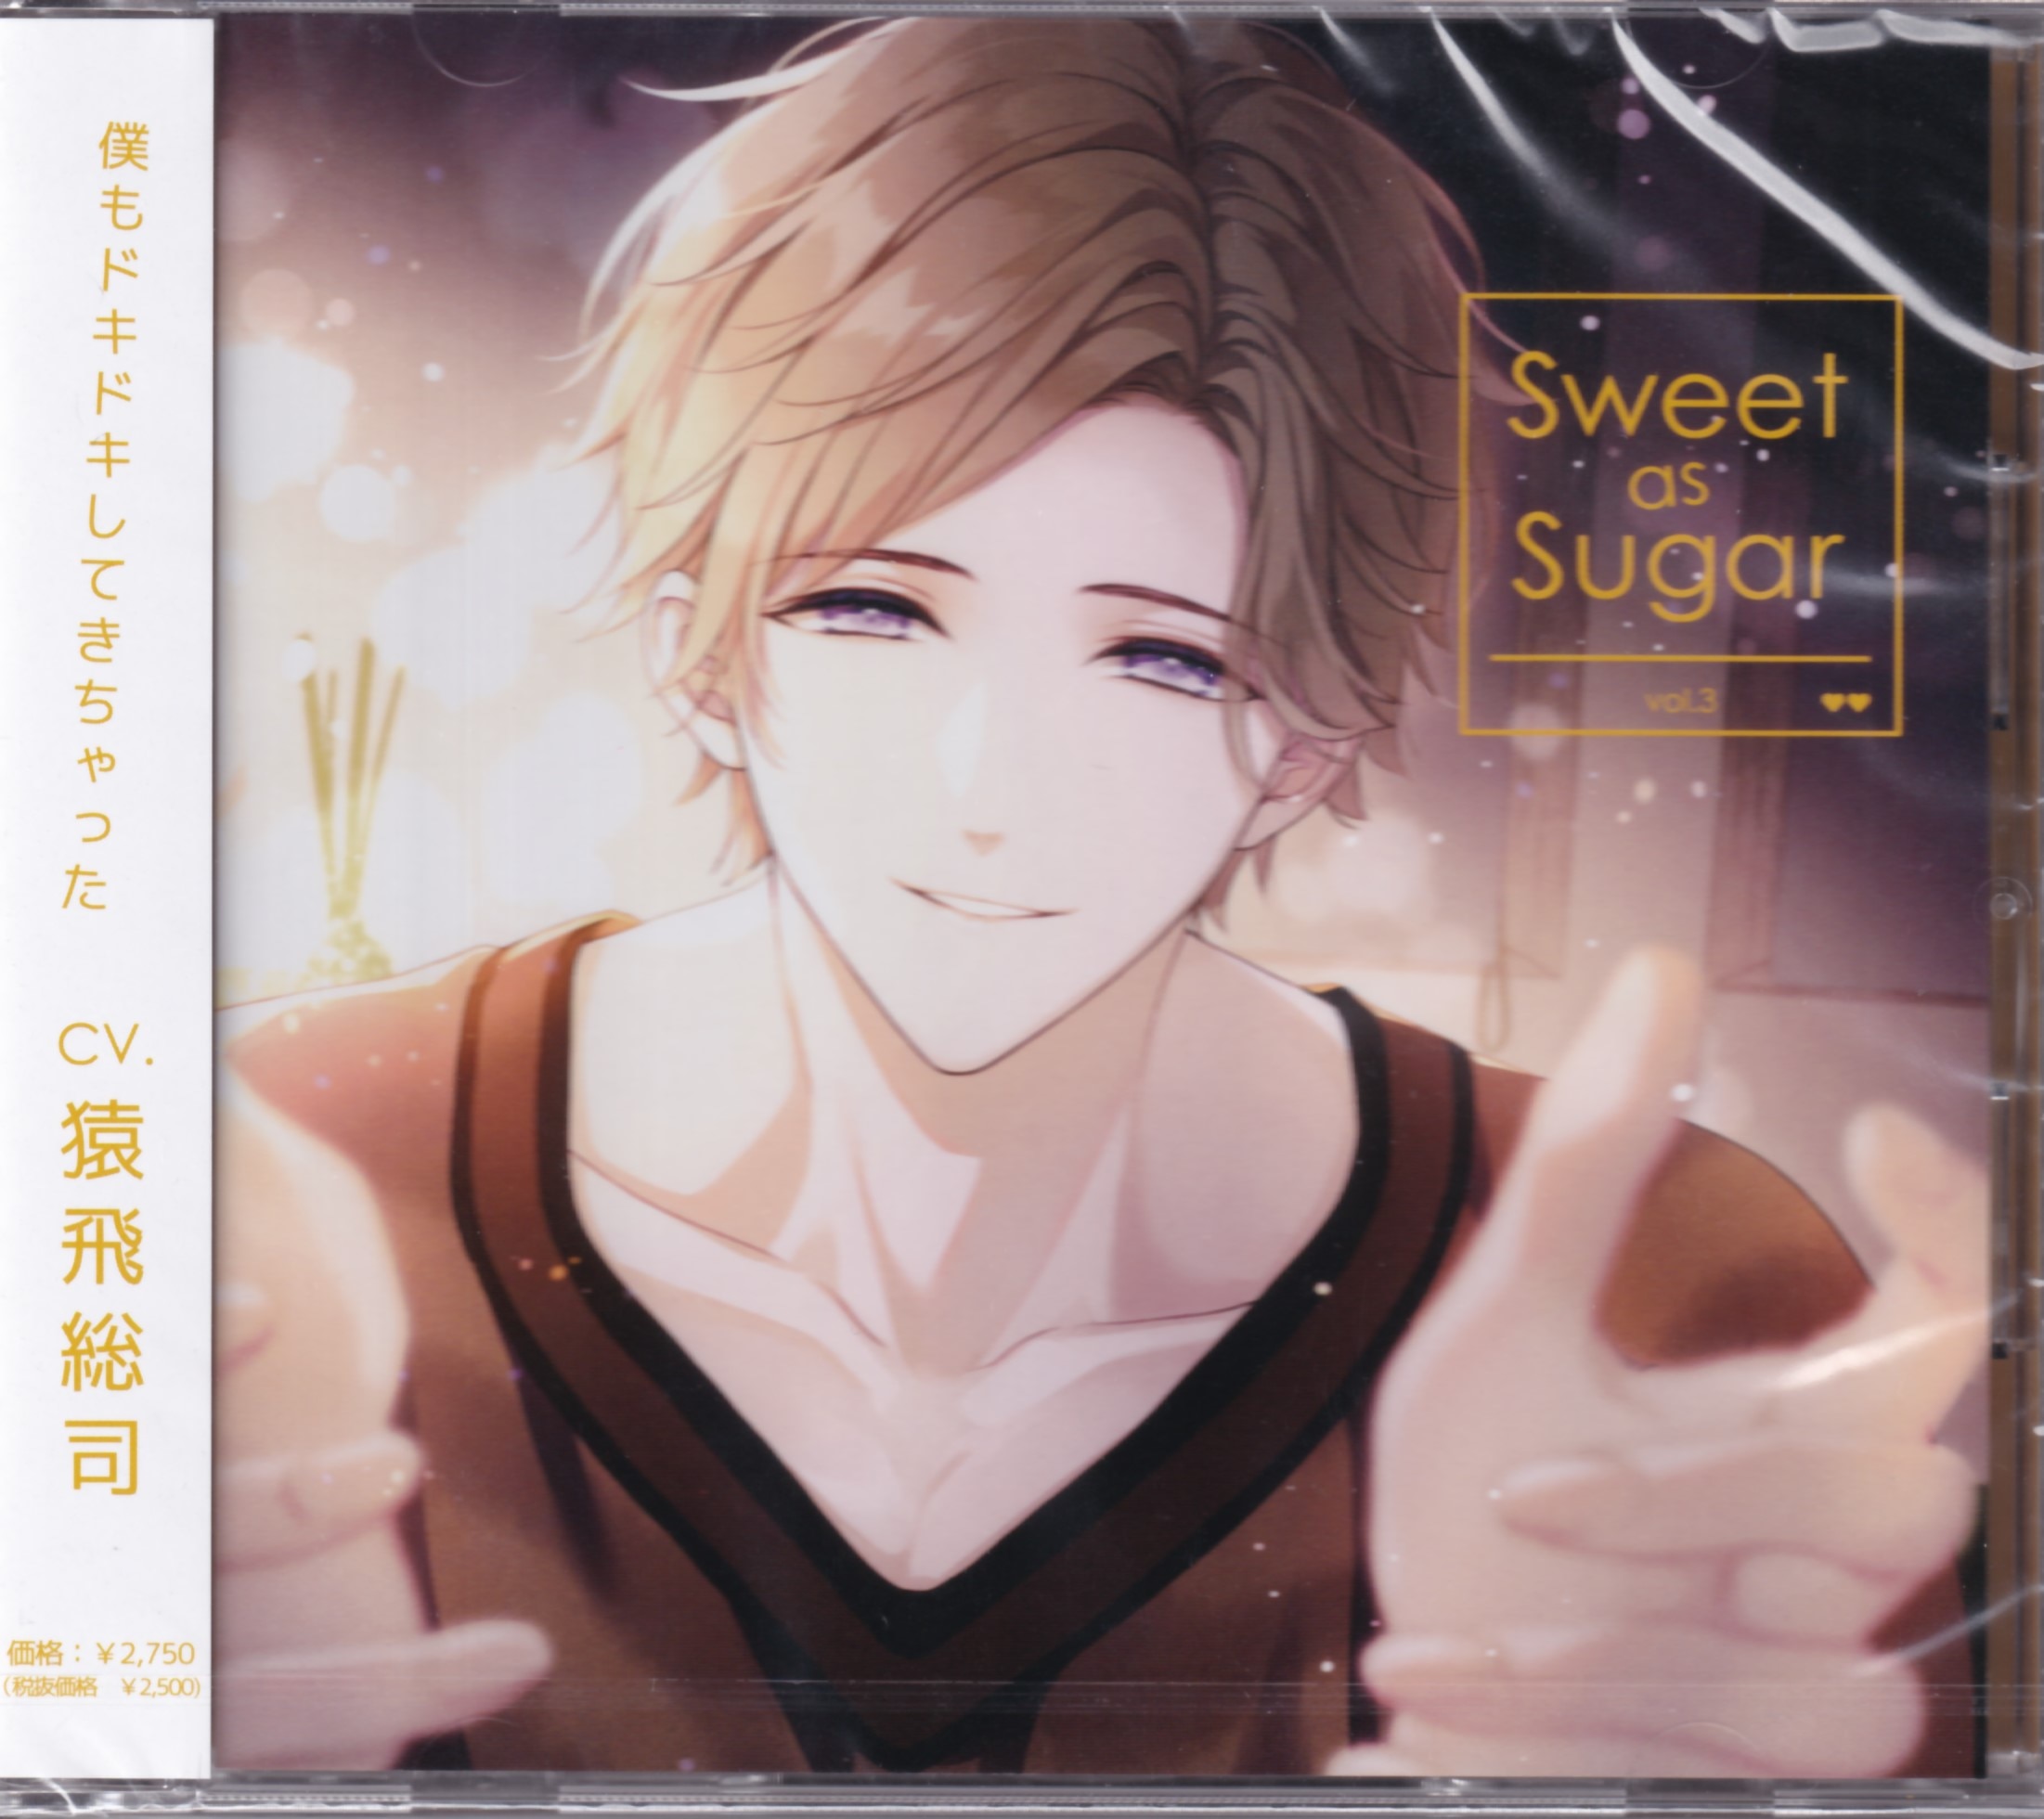 Sweet as Sugar vol.2 cv.テトラポット登 - CD